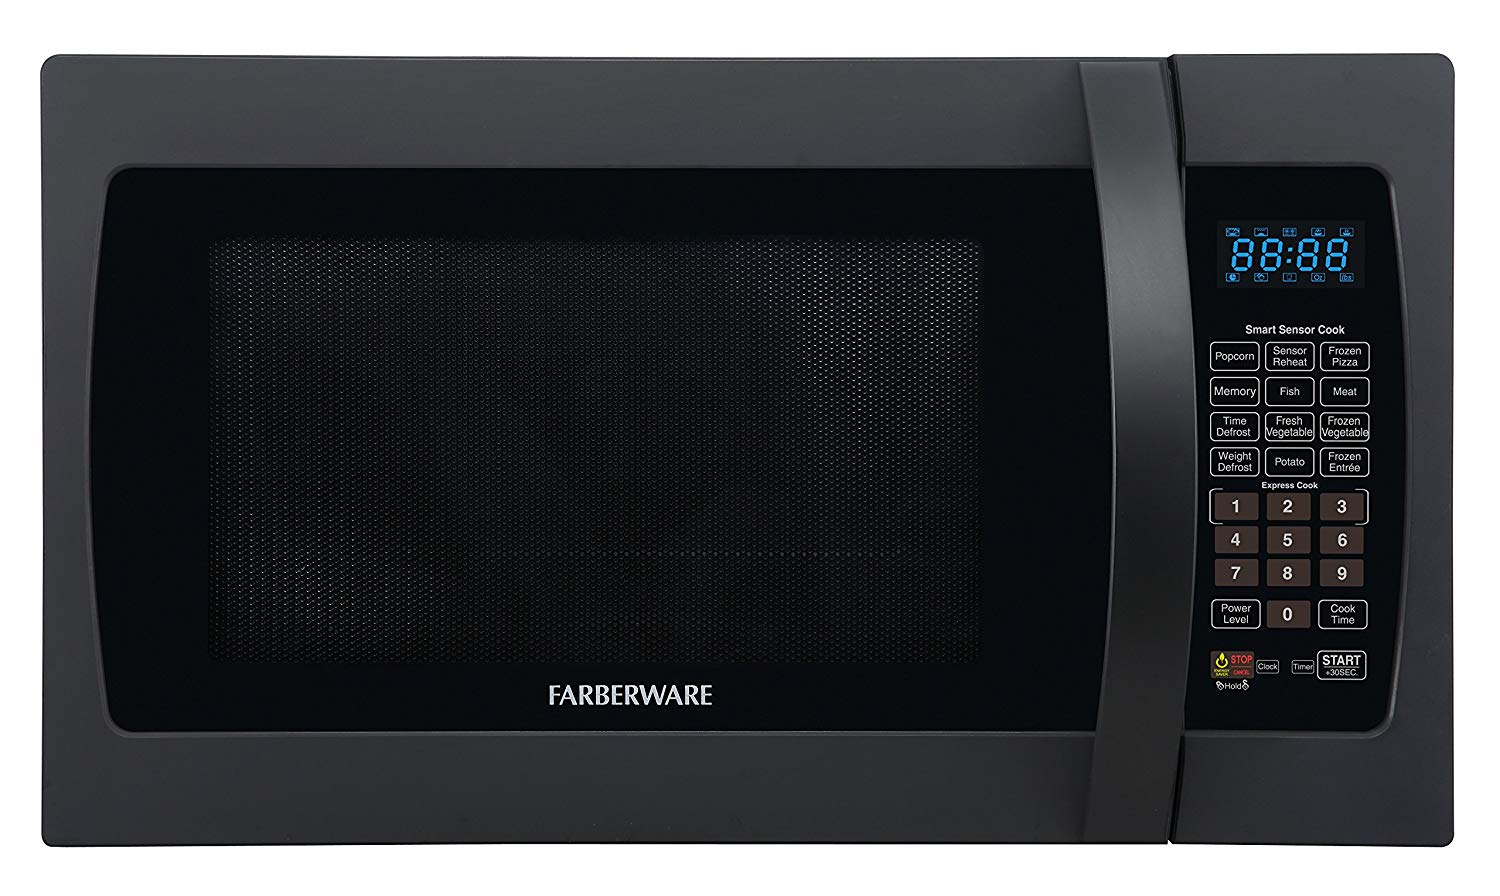 Farberware microwaves